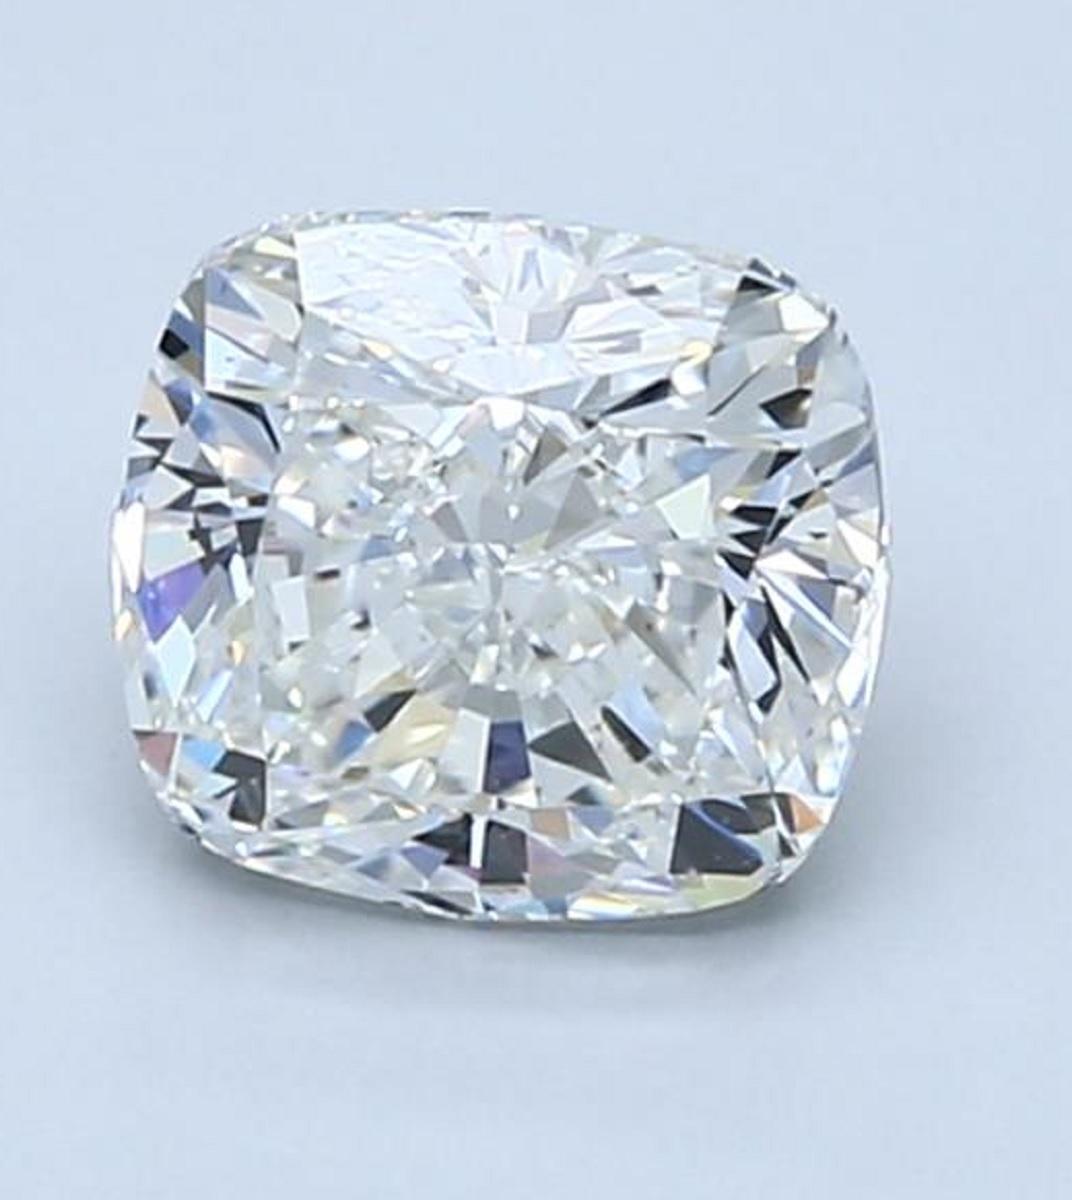 2 carat cushion cut diamond ring